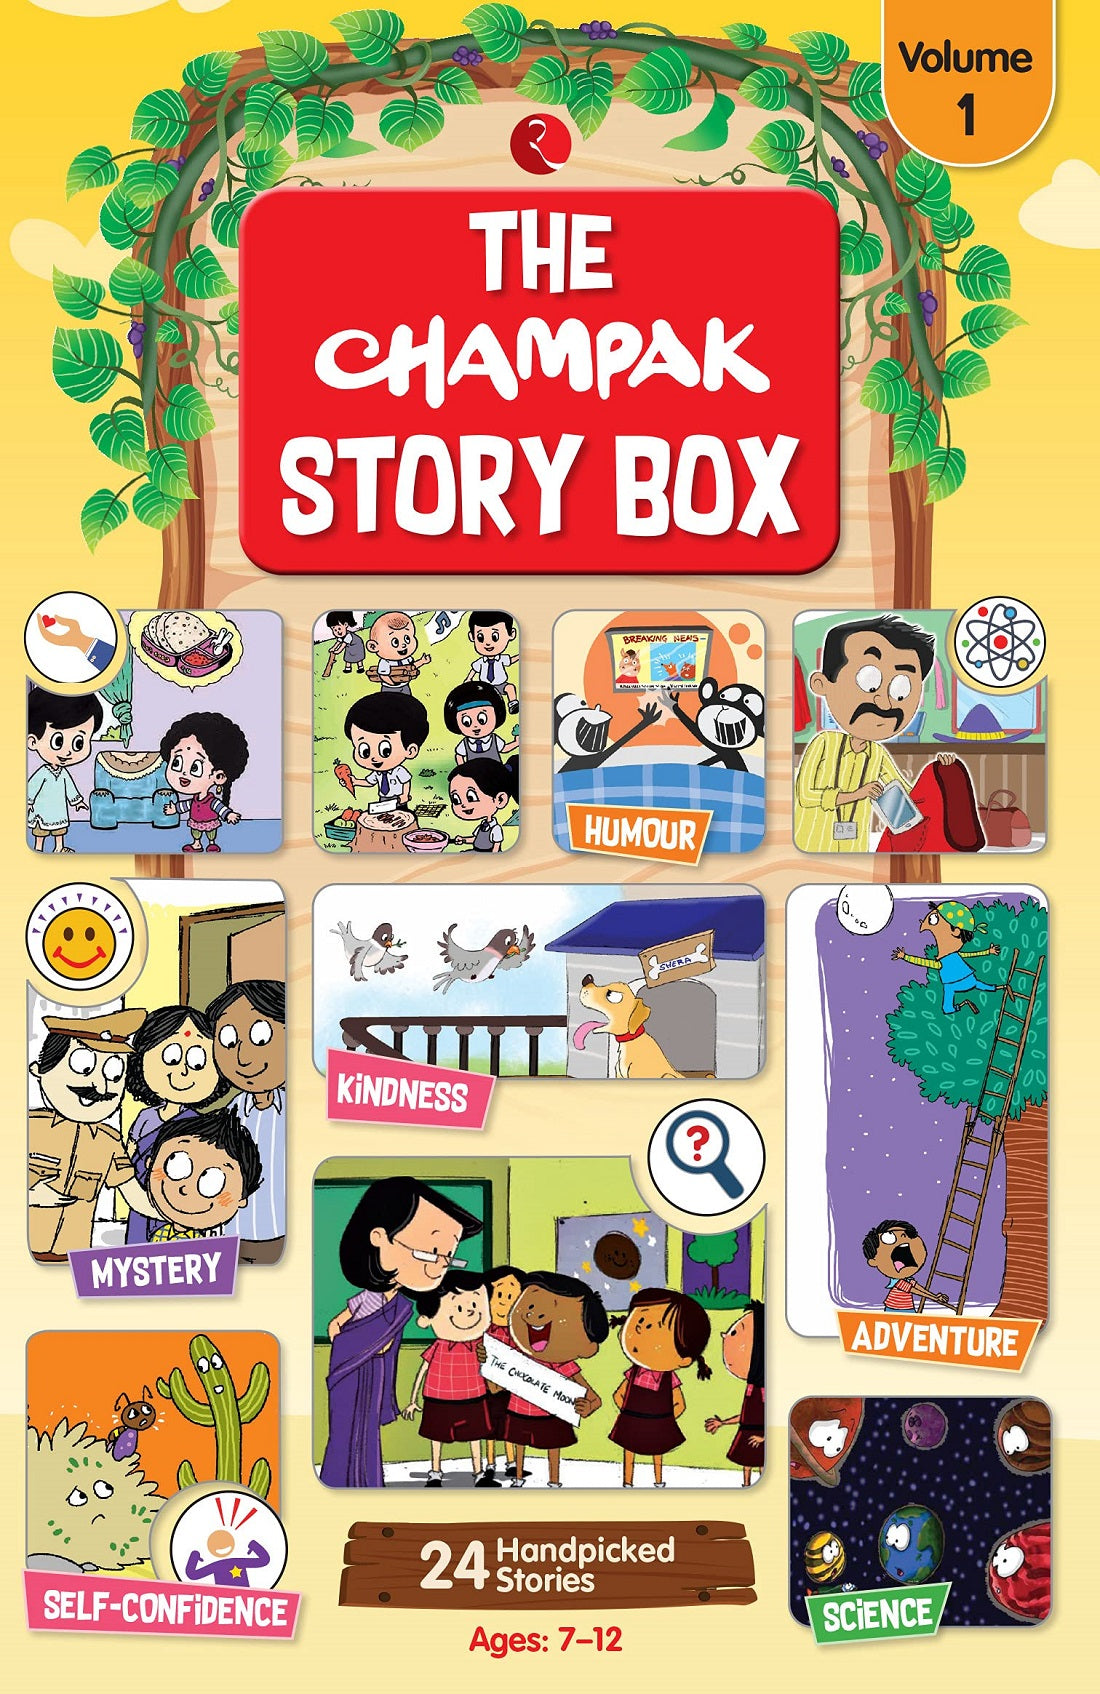 THE CHAMPAK STORY BOX VOL 1